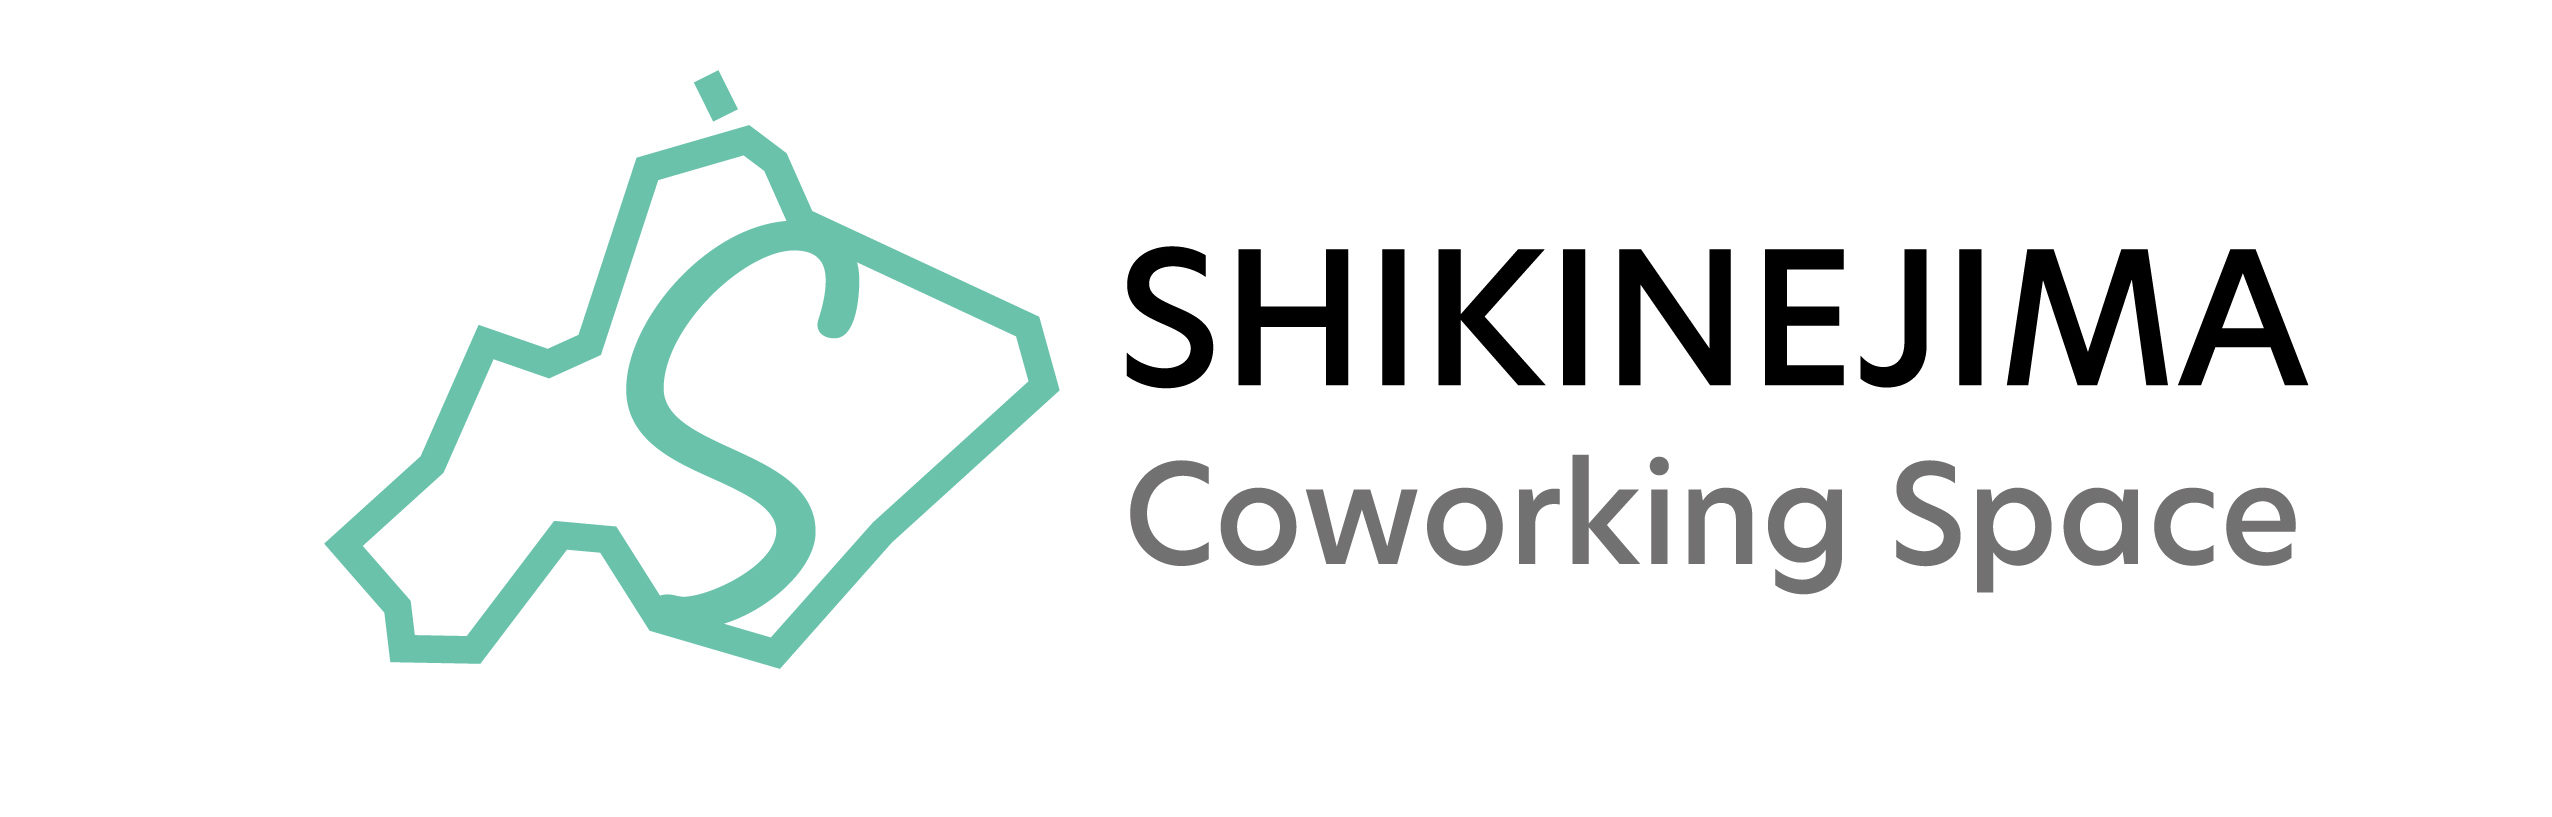 Shikinejima ISLAND workcation Project